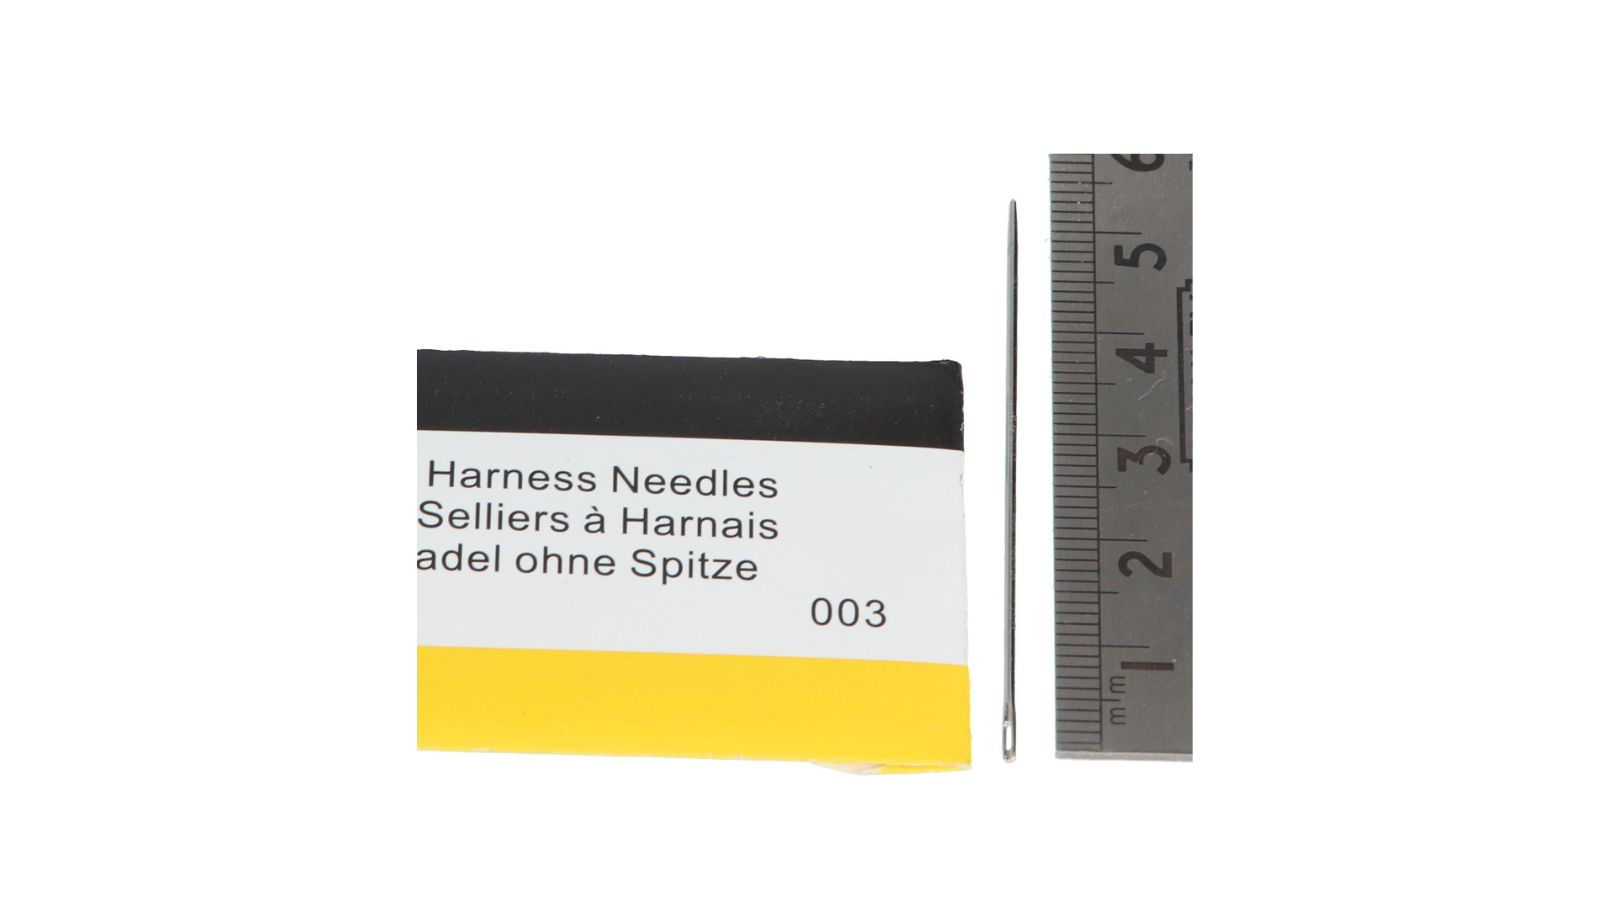 John James Harness Needles